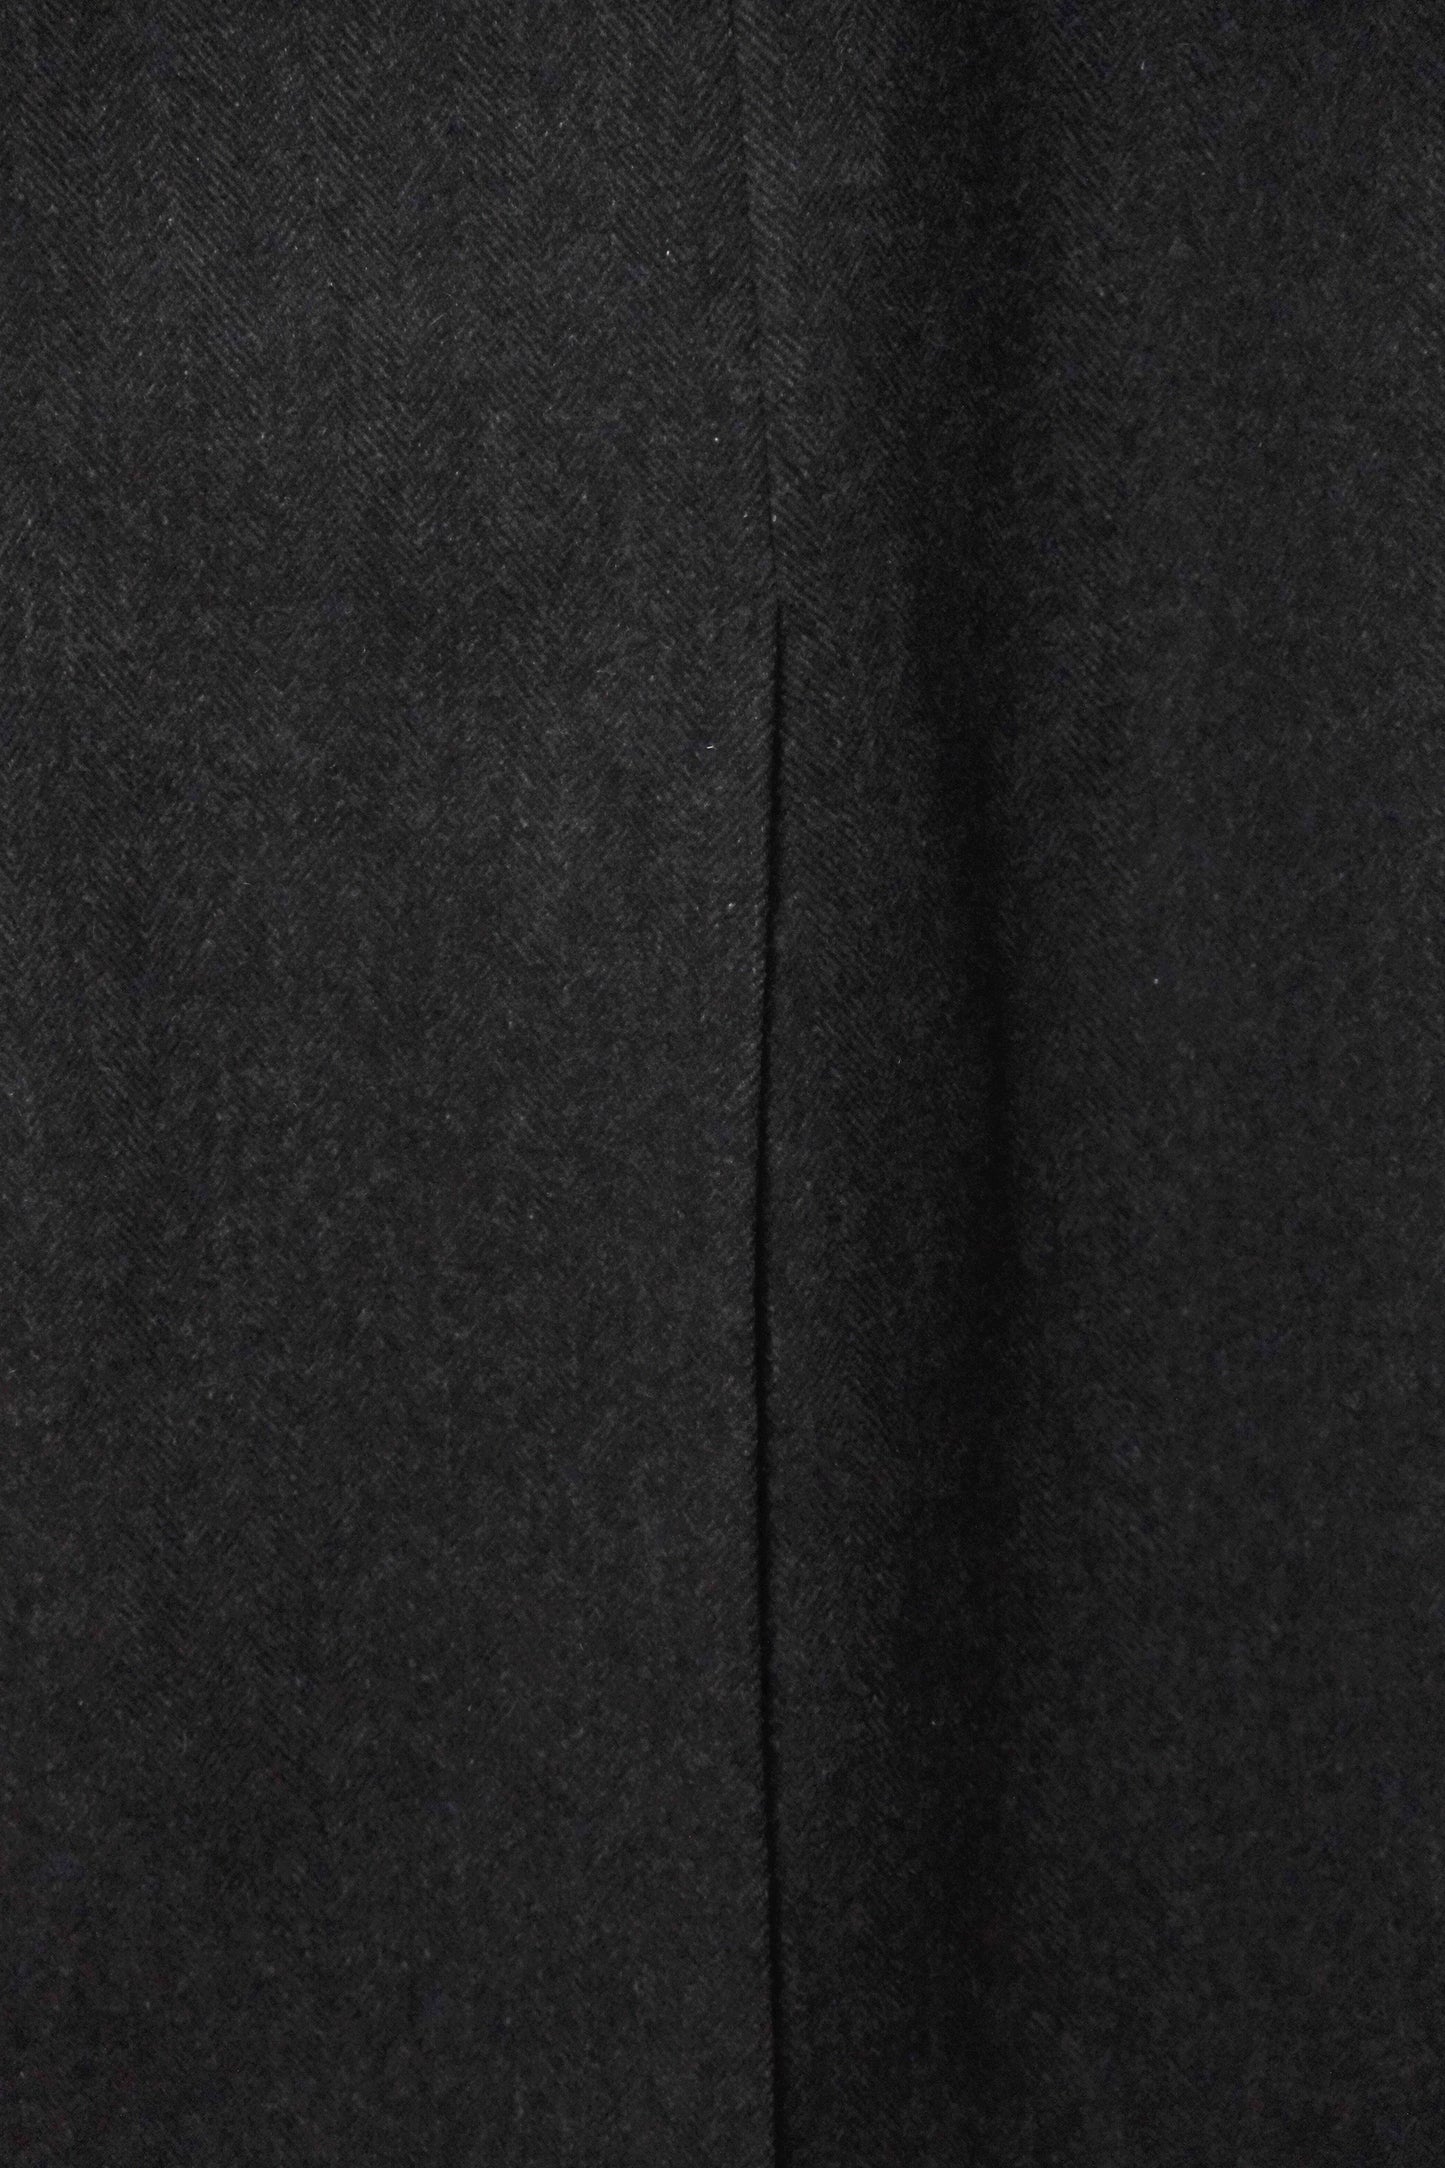 Harvé Benard Grey Wool Tweed Double Breasted Long Coat US 10